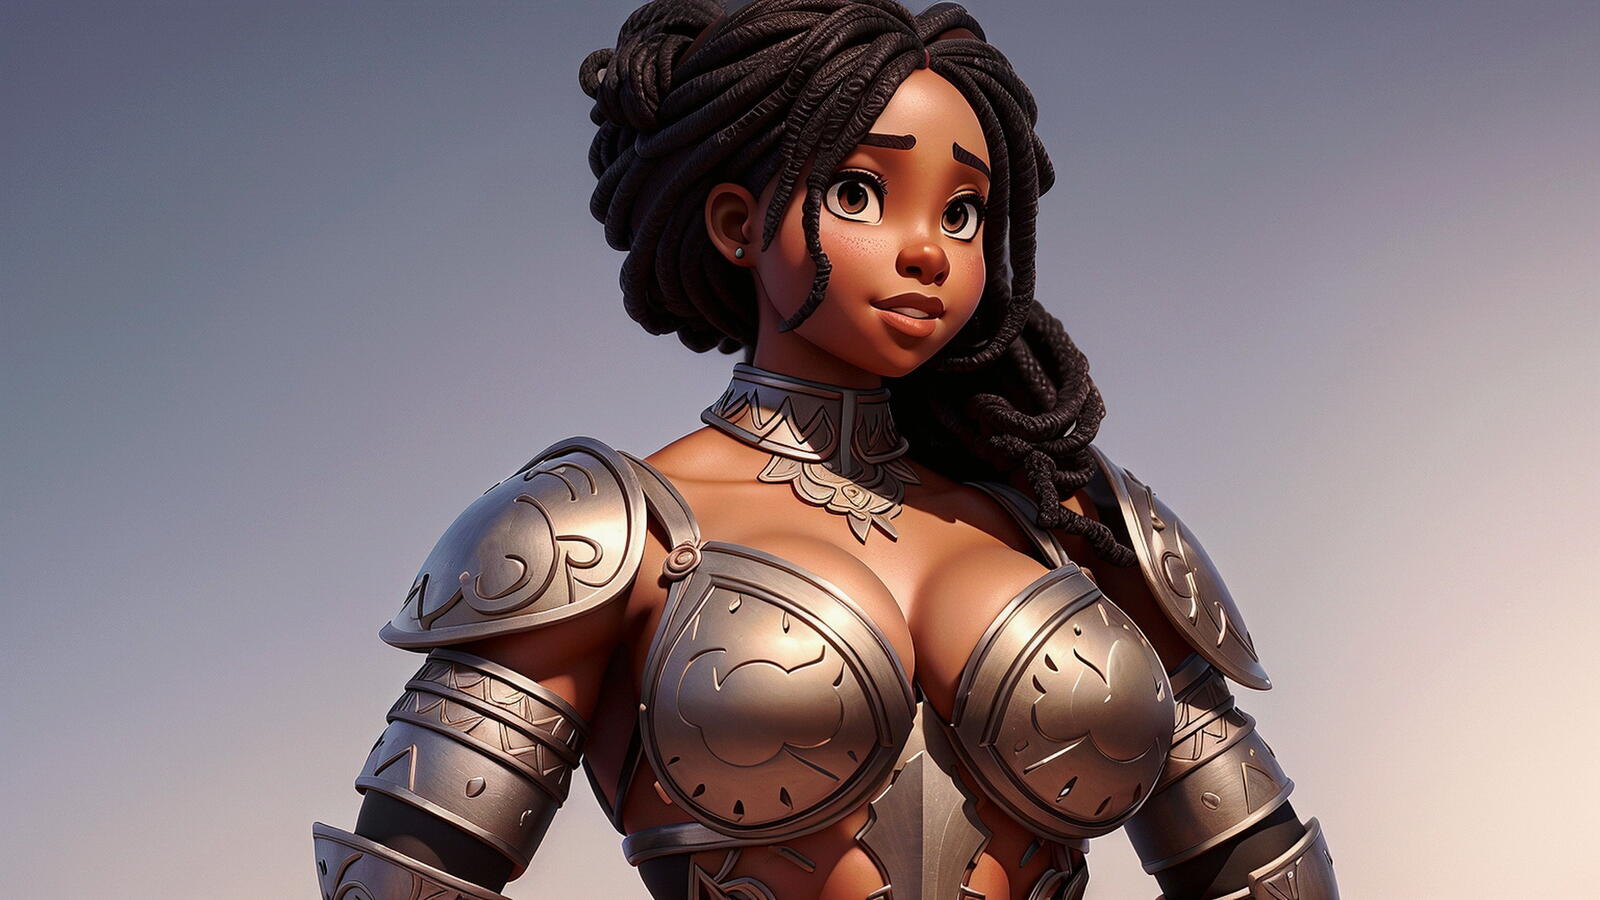 Free photo Black girl warrior in armor on light background